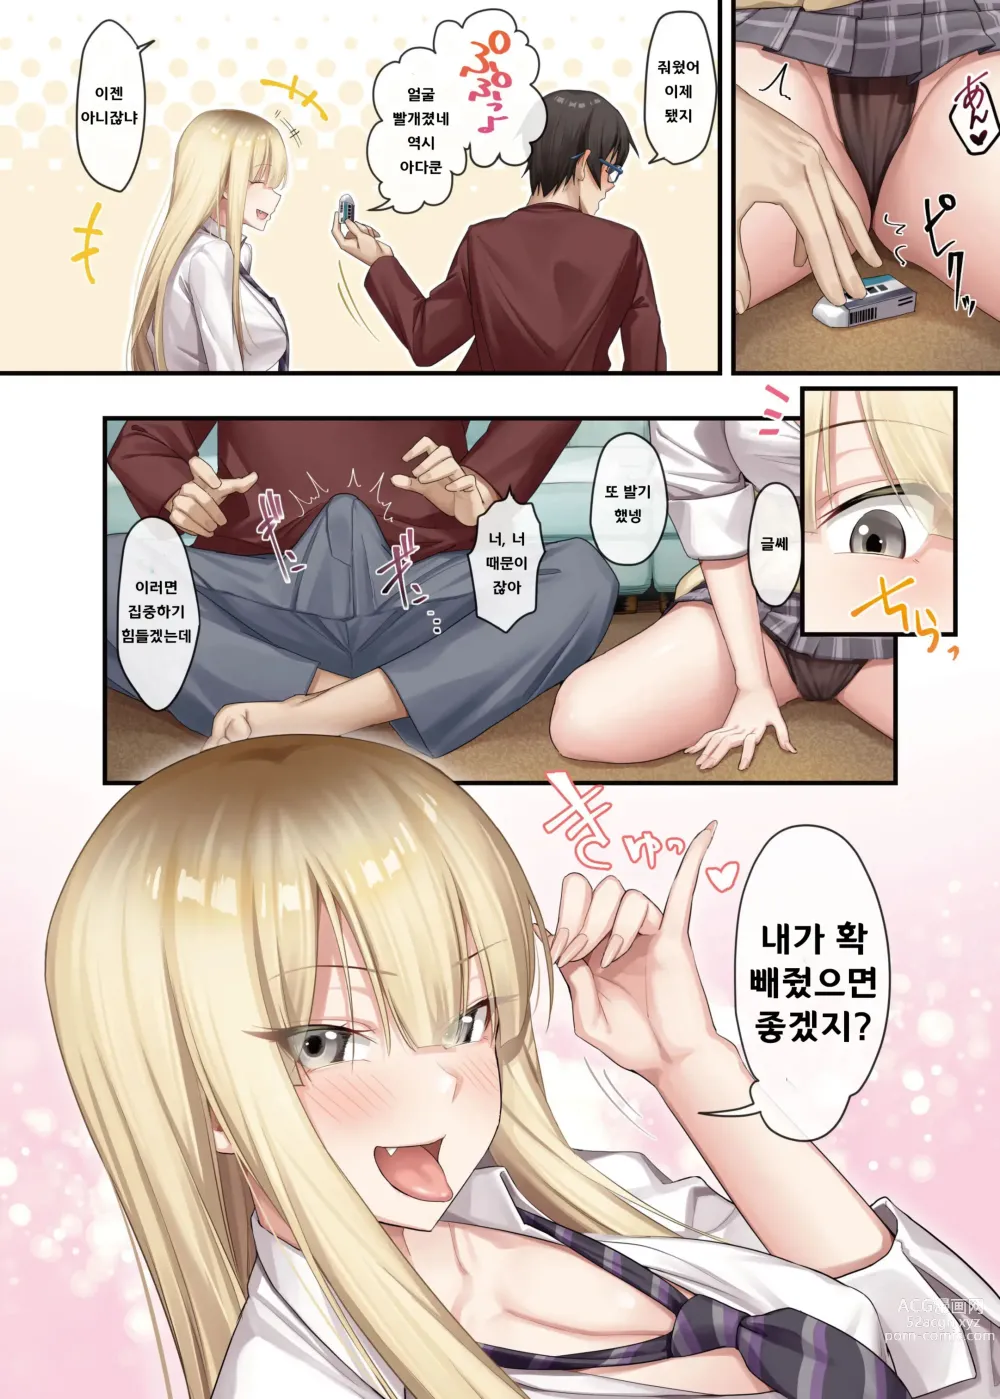 Page 25 of doujinshi 가정교사로써 더부살이할랬더니, 음란한 갸루들과 섹스만 계속 하고 있습니다.